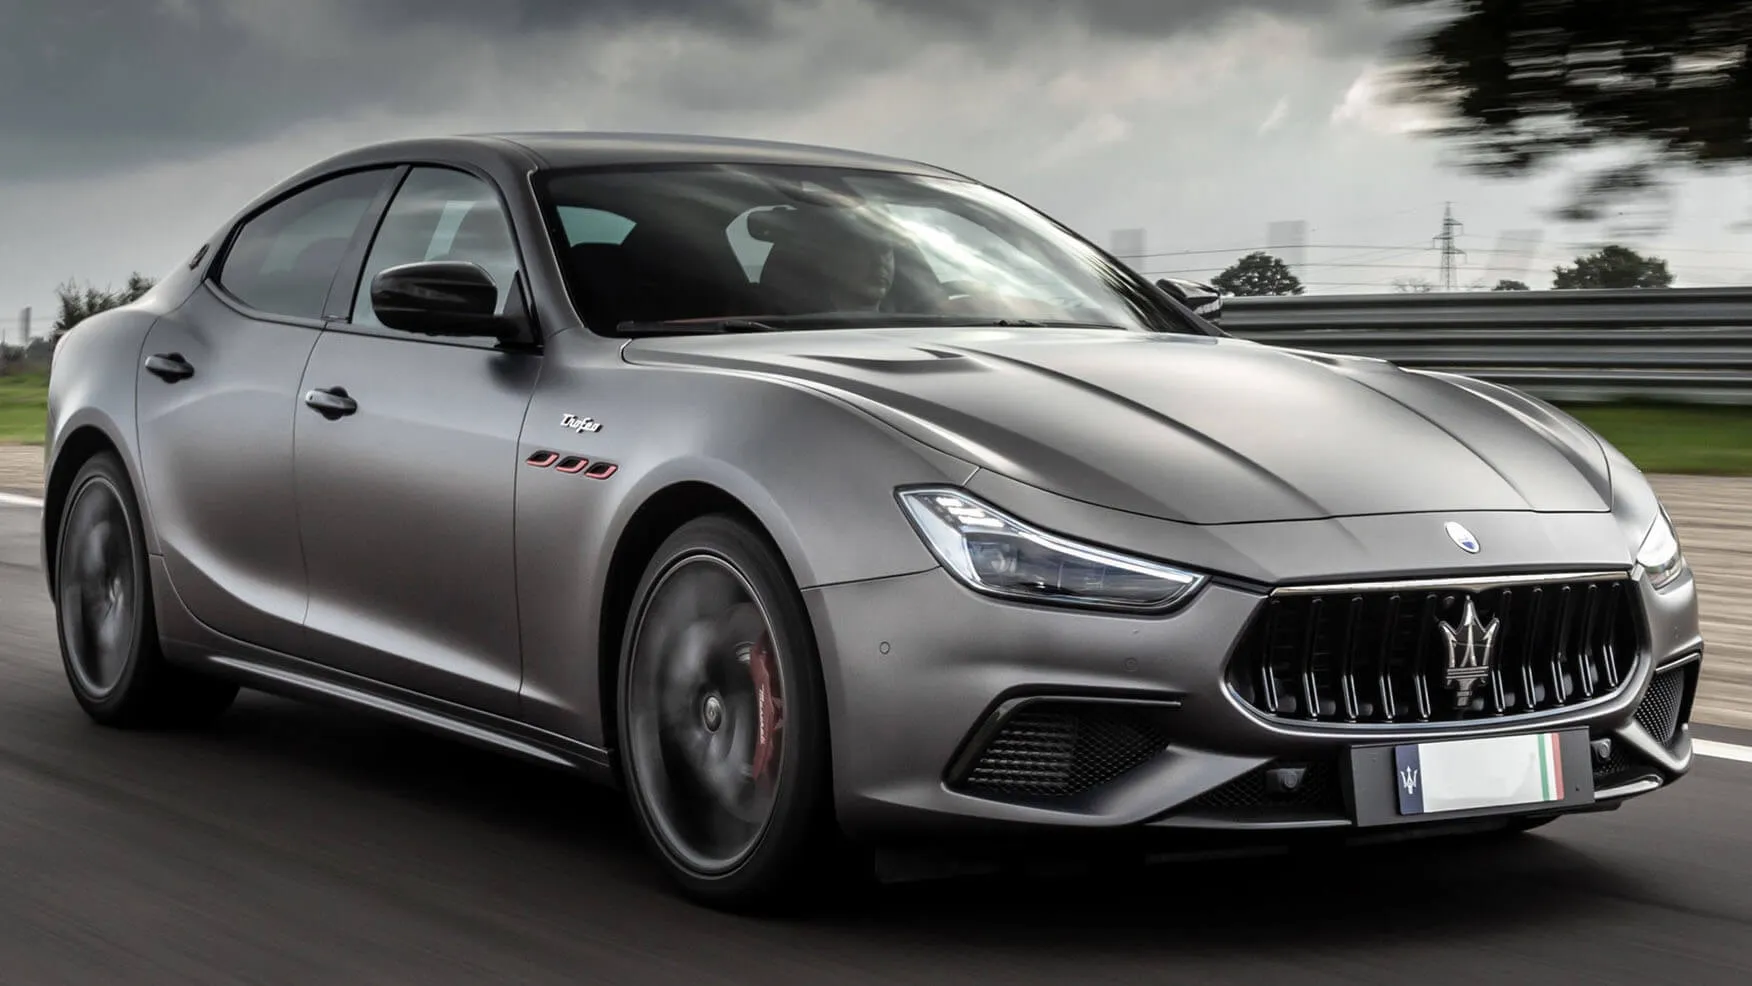 2020 Maserati Ghibli Review - Italian Perfection (The New Trofeo)